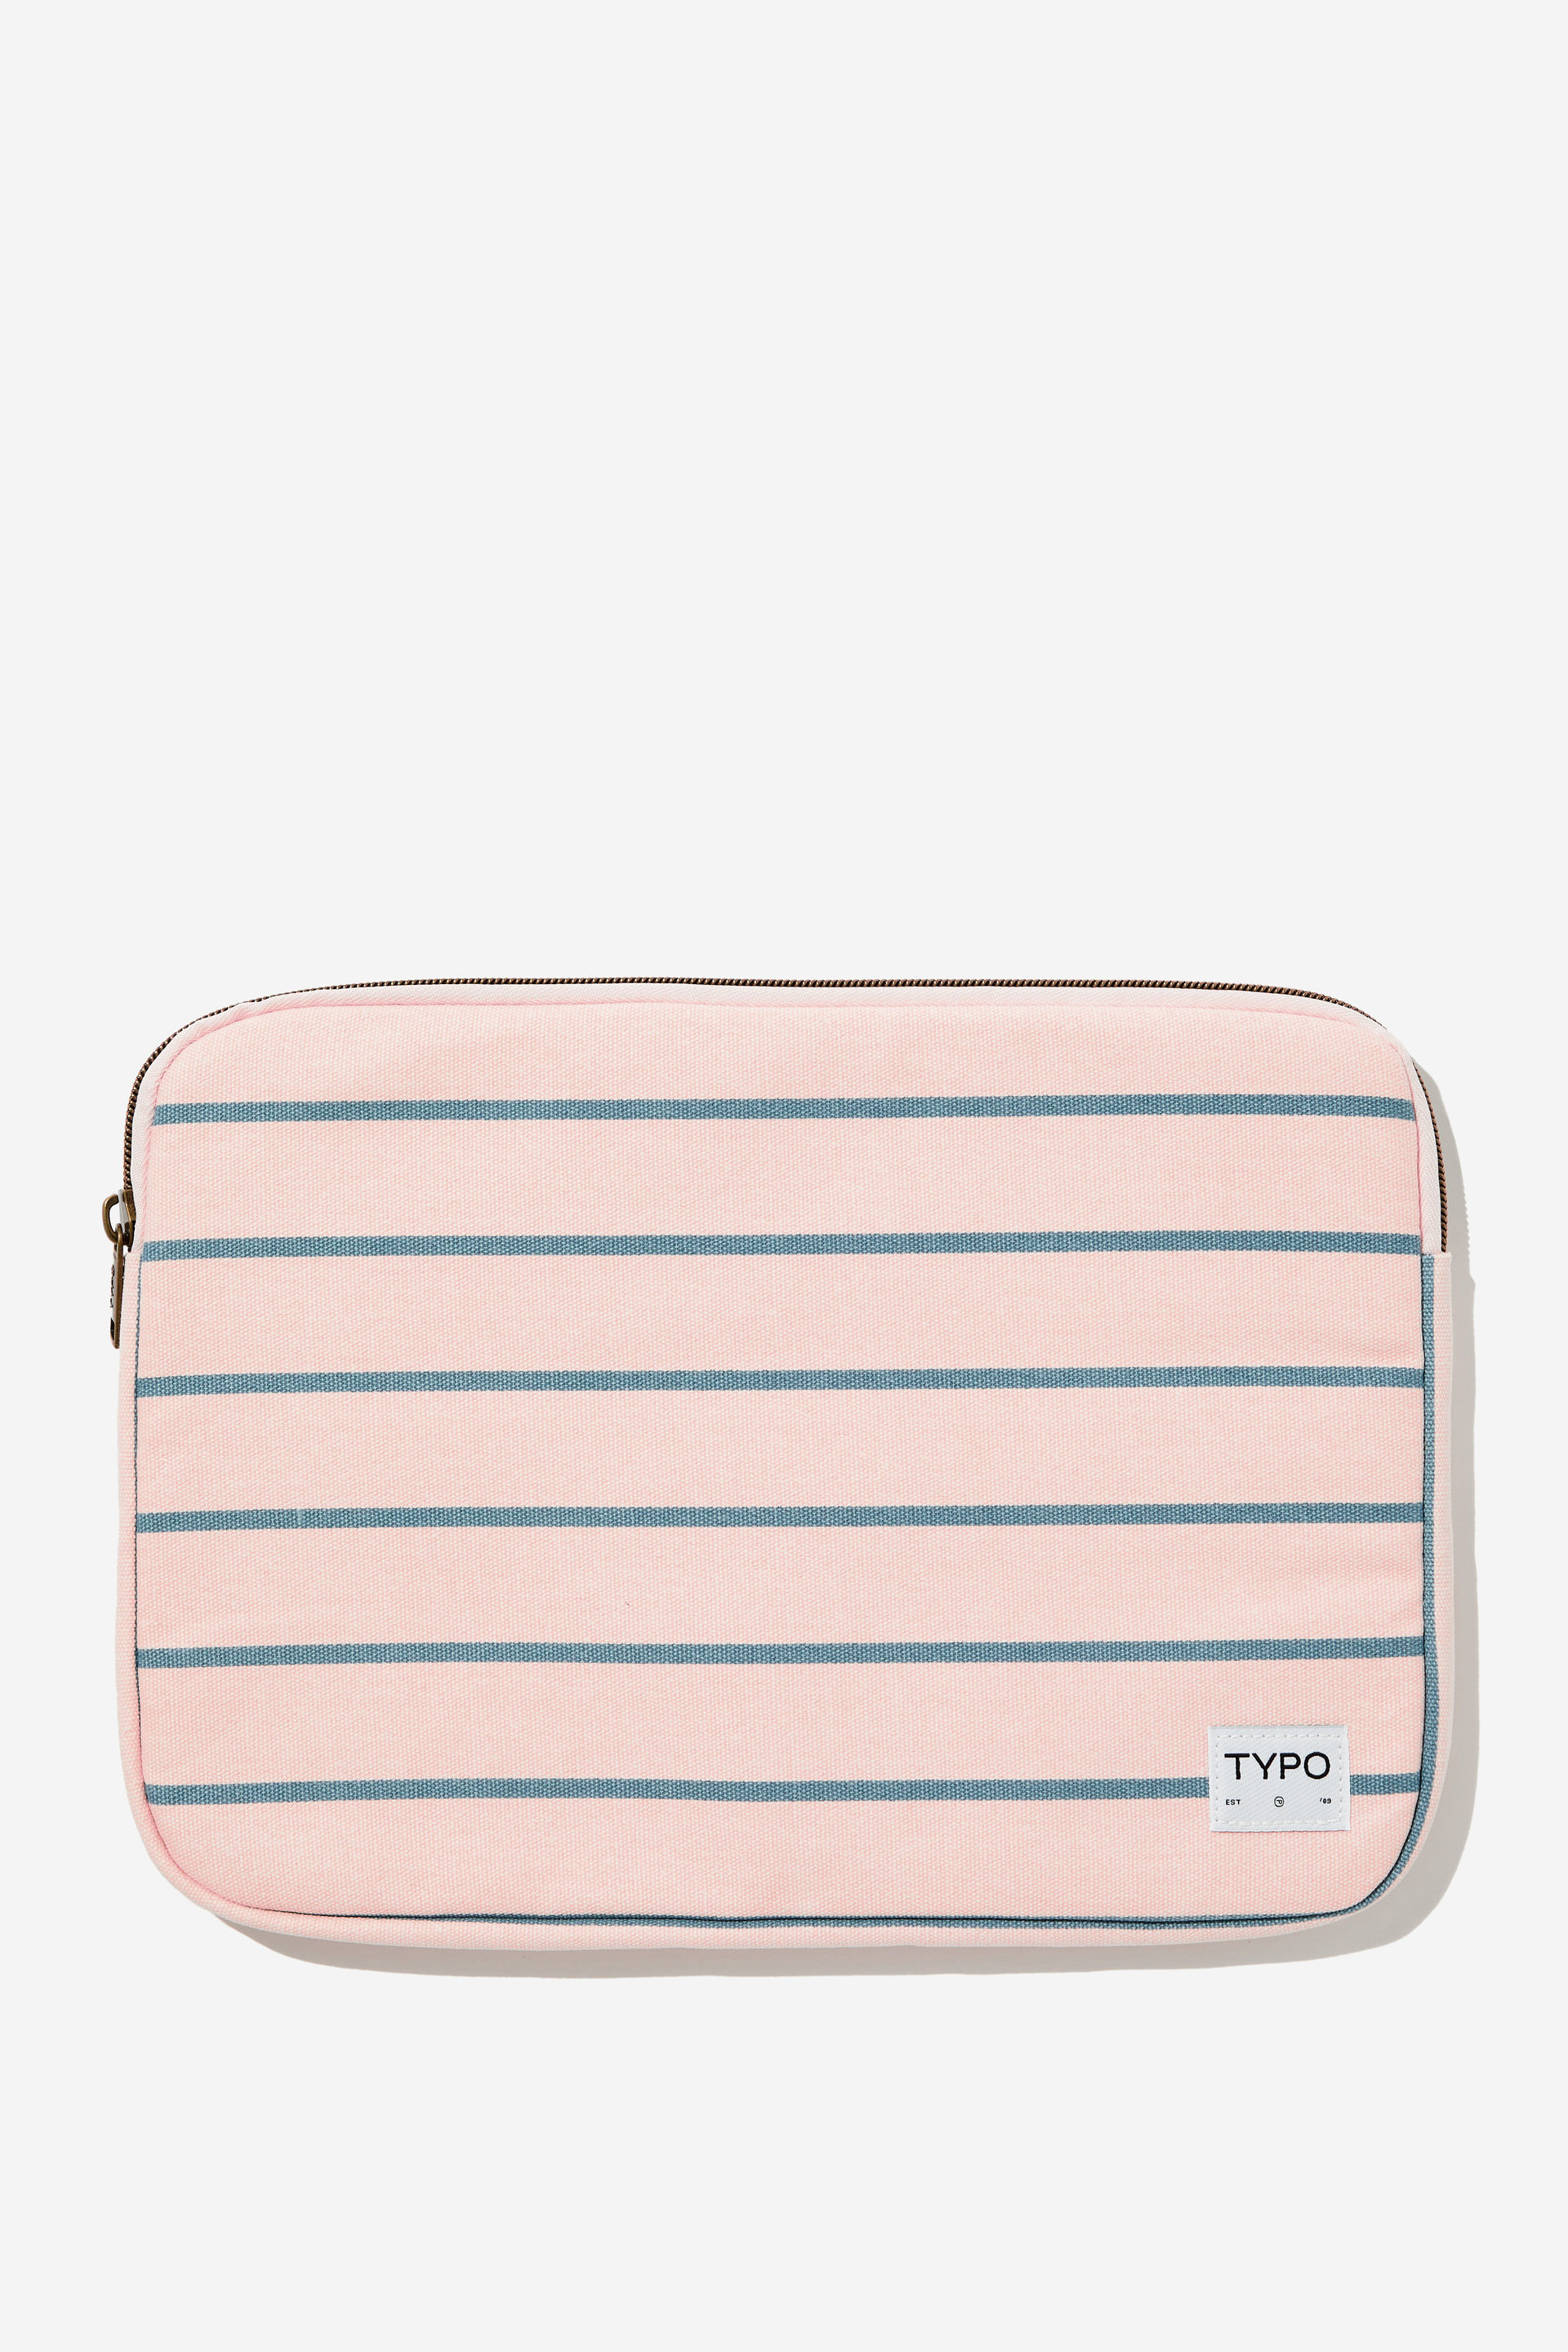 Typo - Take Me Away 13 Inch Laptop Case - Varsity stripe/ ballet blush